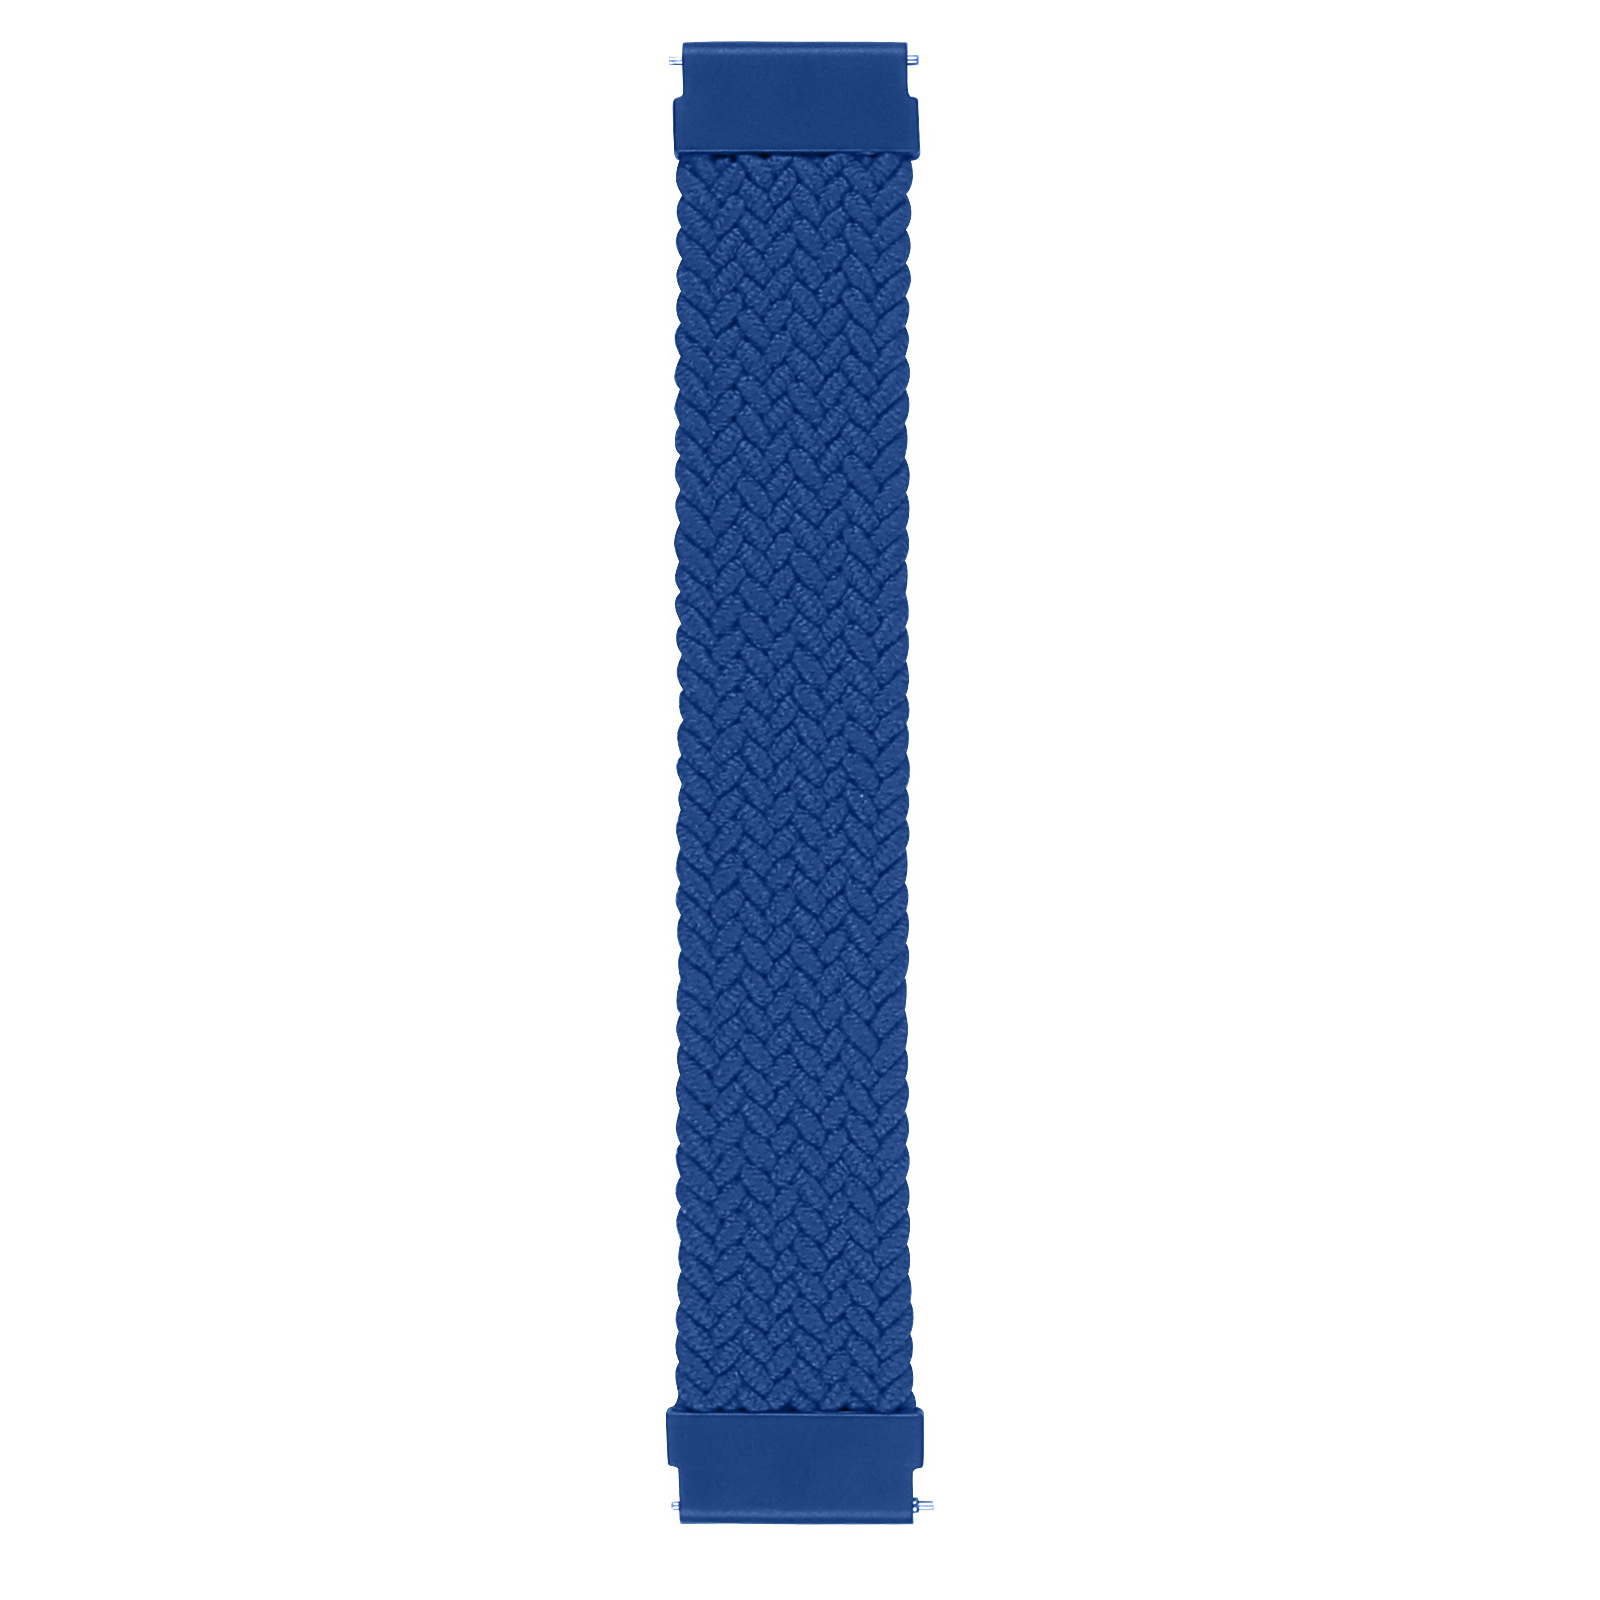 Cinturino Solo intrecciato in nylon per Samsung Galaxy Watch - blu atlantico